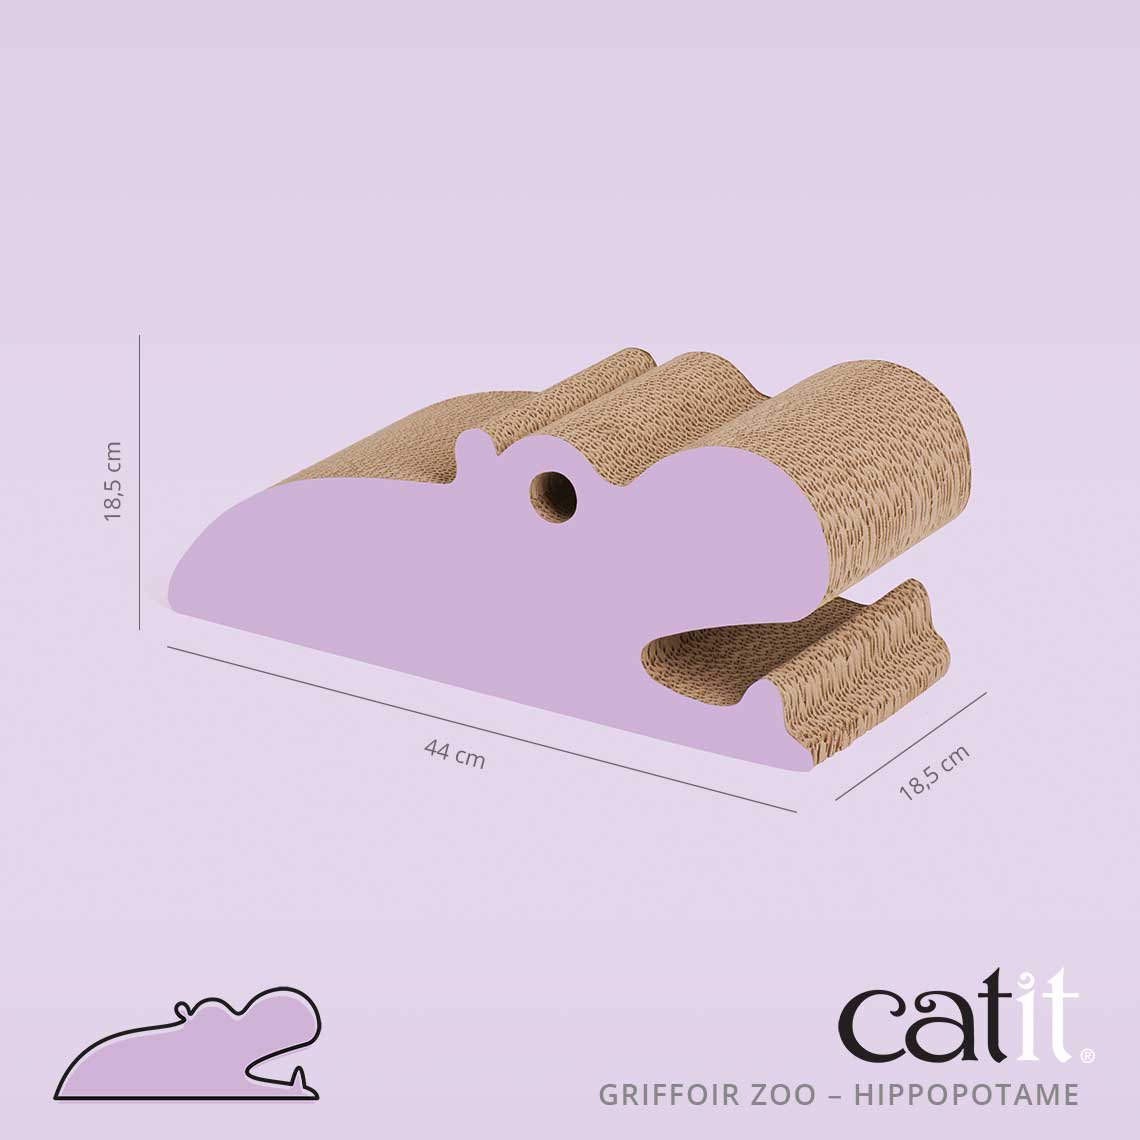 Griffoir Catit Zoo ─ Hippopotame